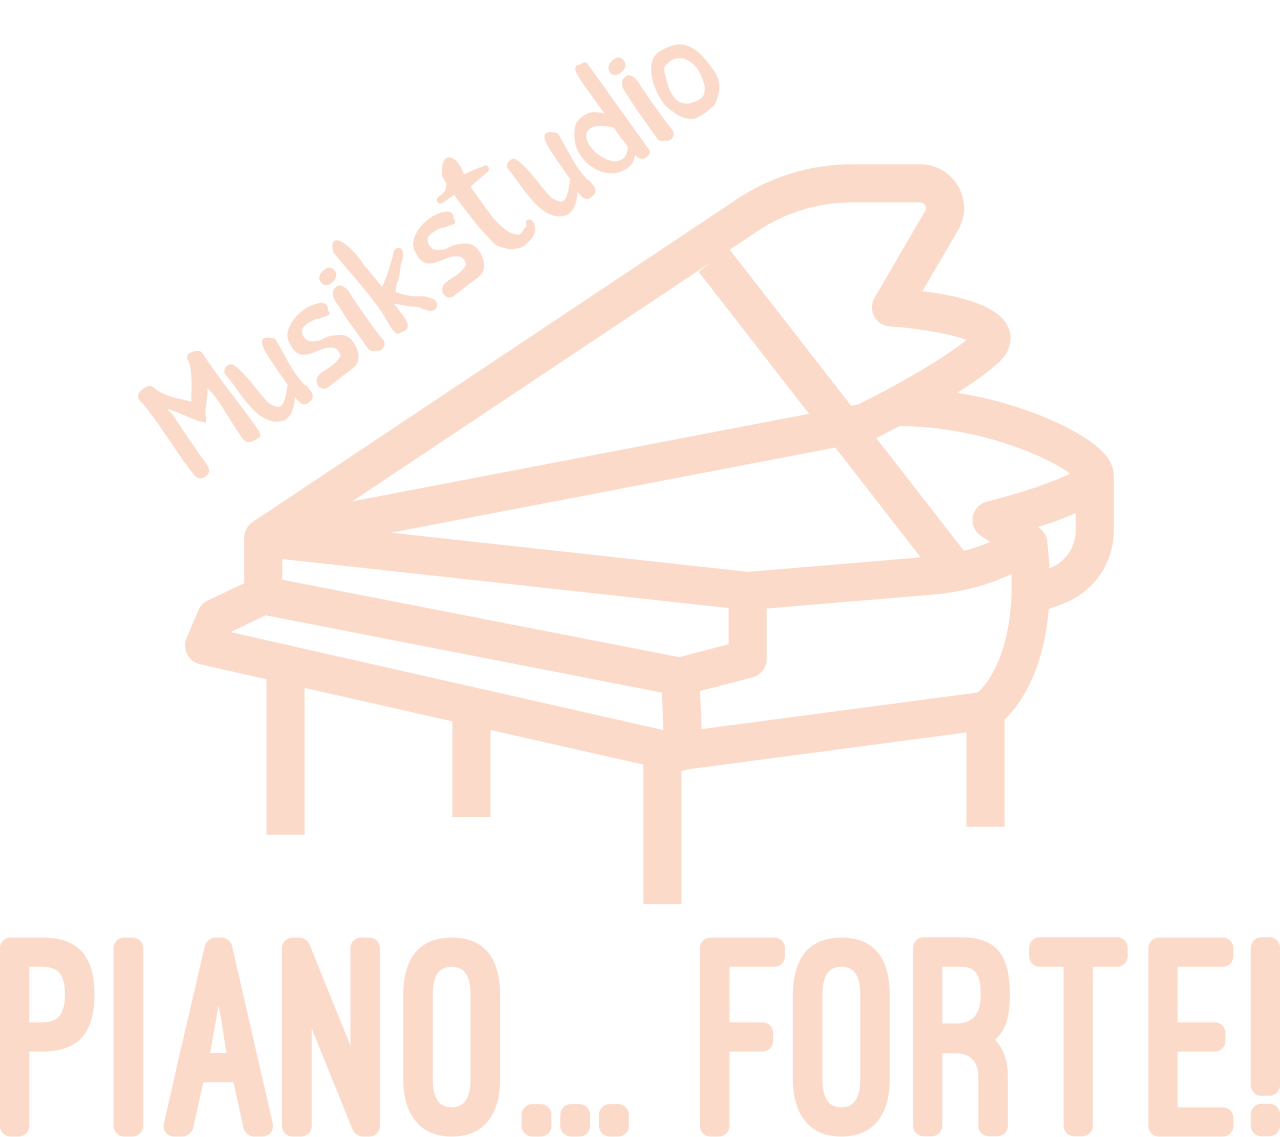 Piano... Forte! 's logo